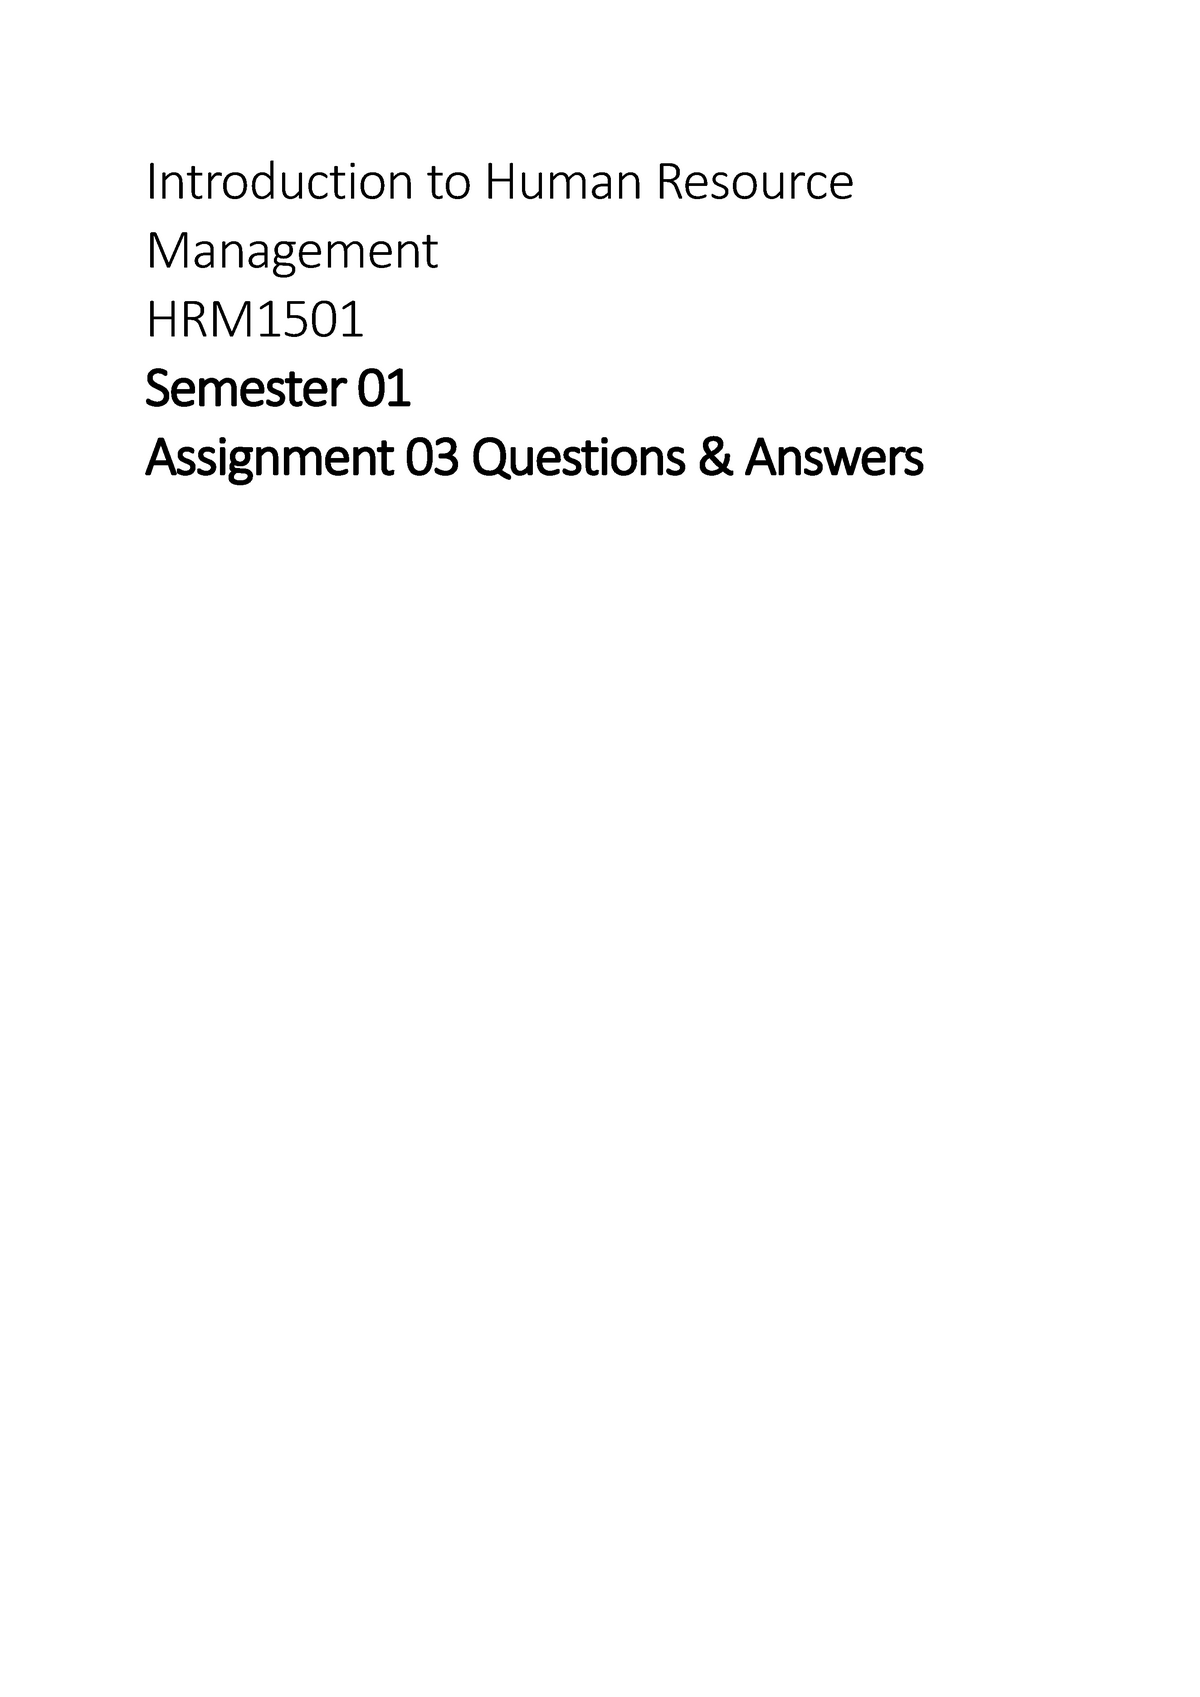 hrm1501 assignment 3